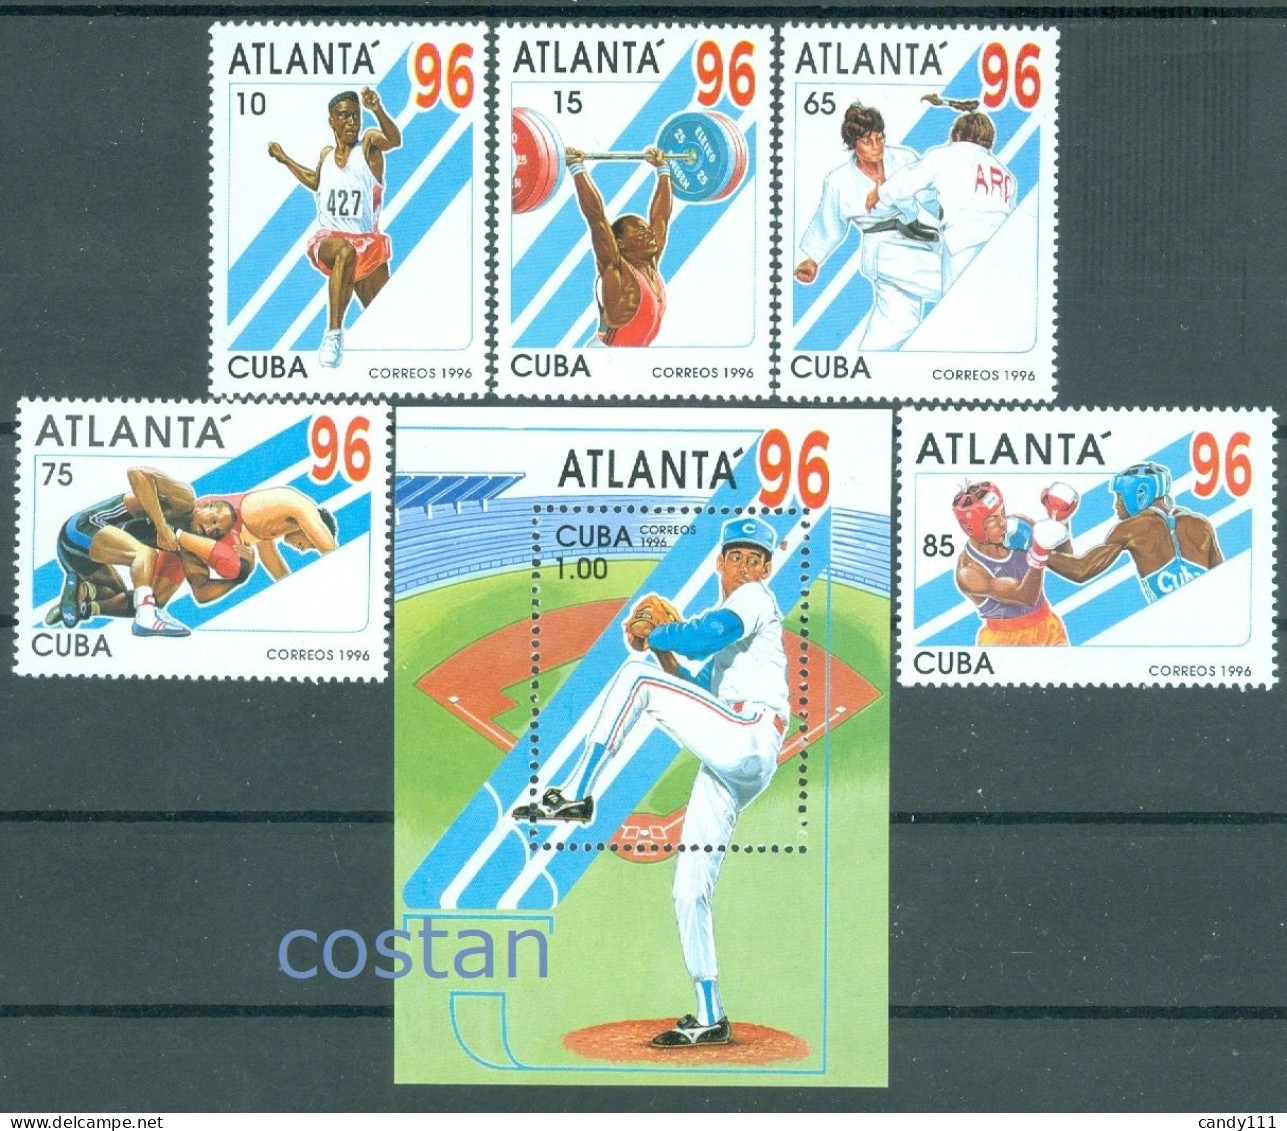 1996 Atlanta Olympic Games,Baseball,JUDO,boxing,wrestling,cuba,3899,142,MNH - Baseball